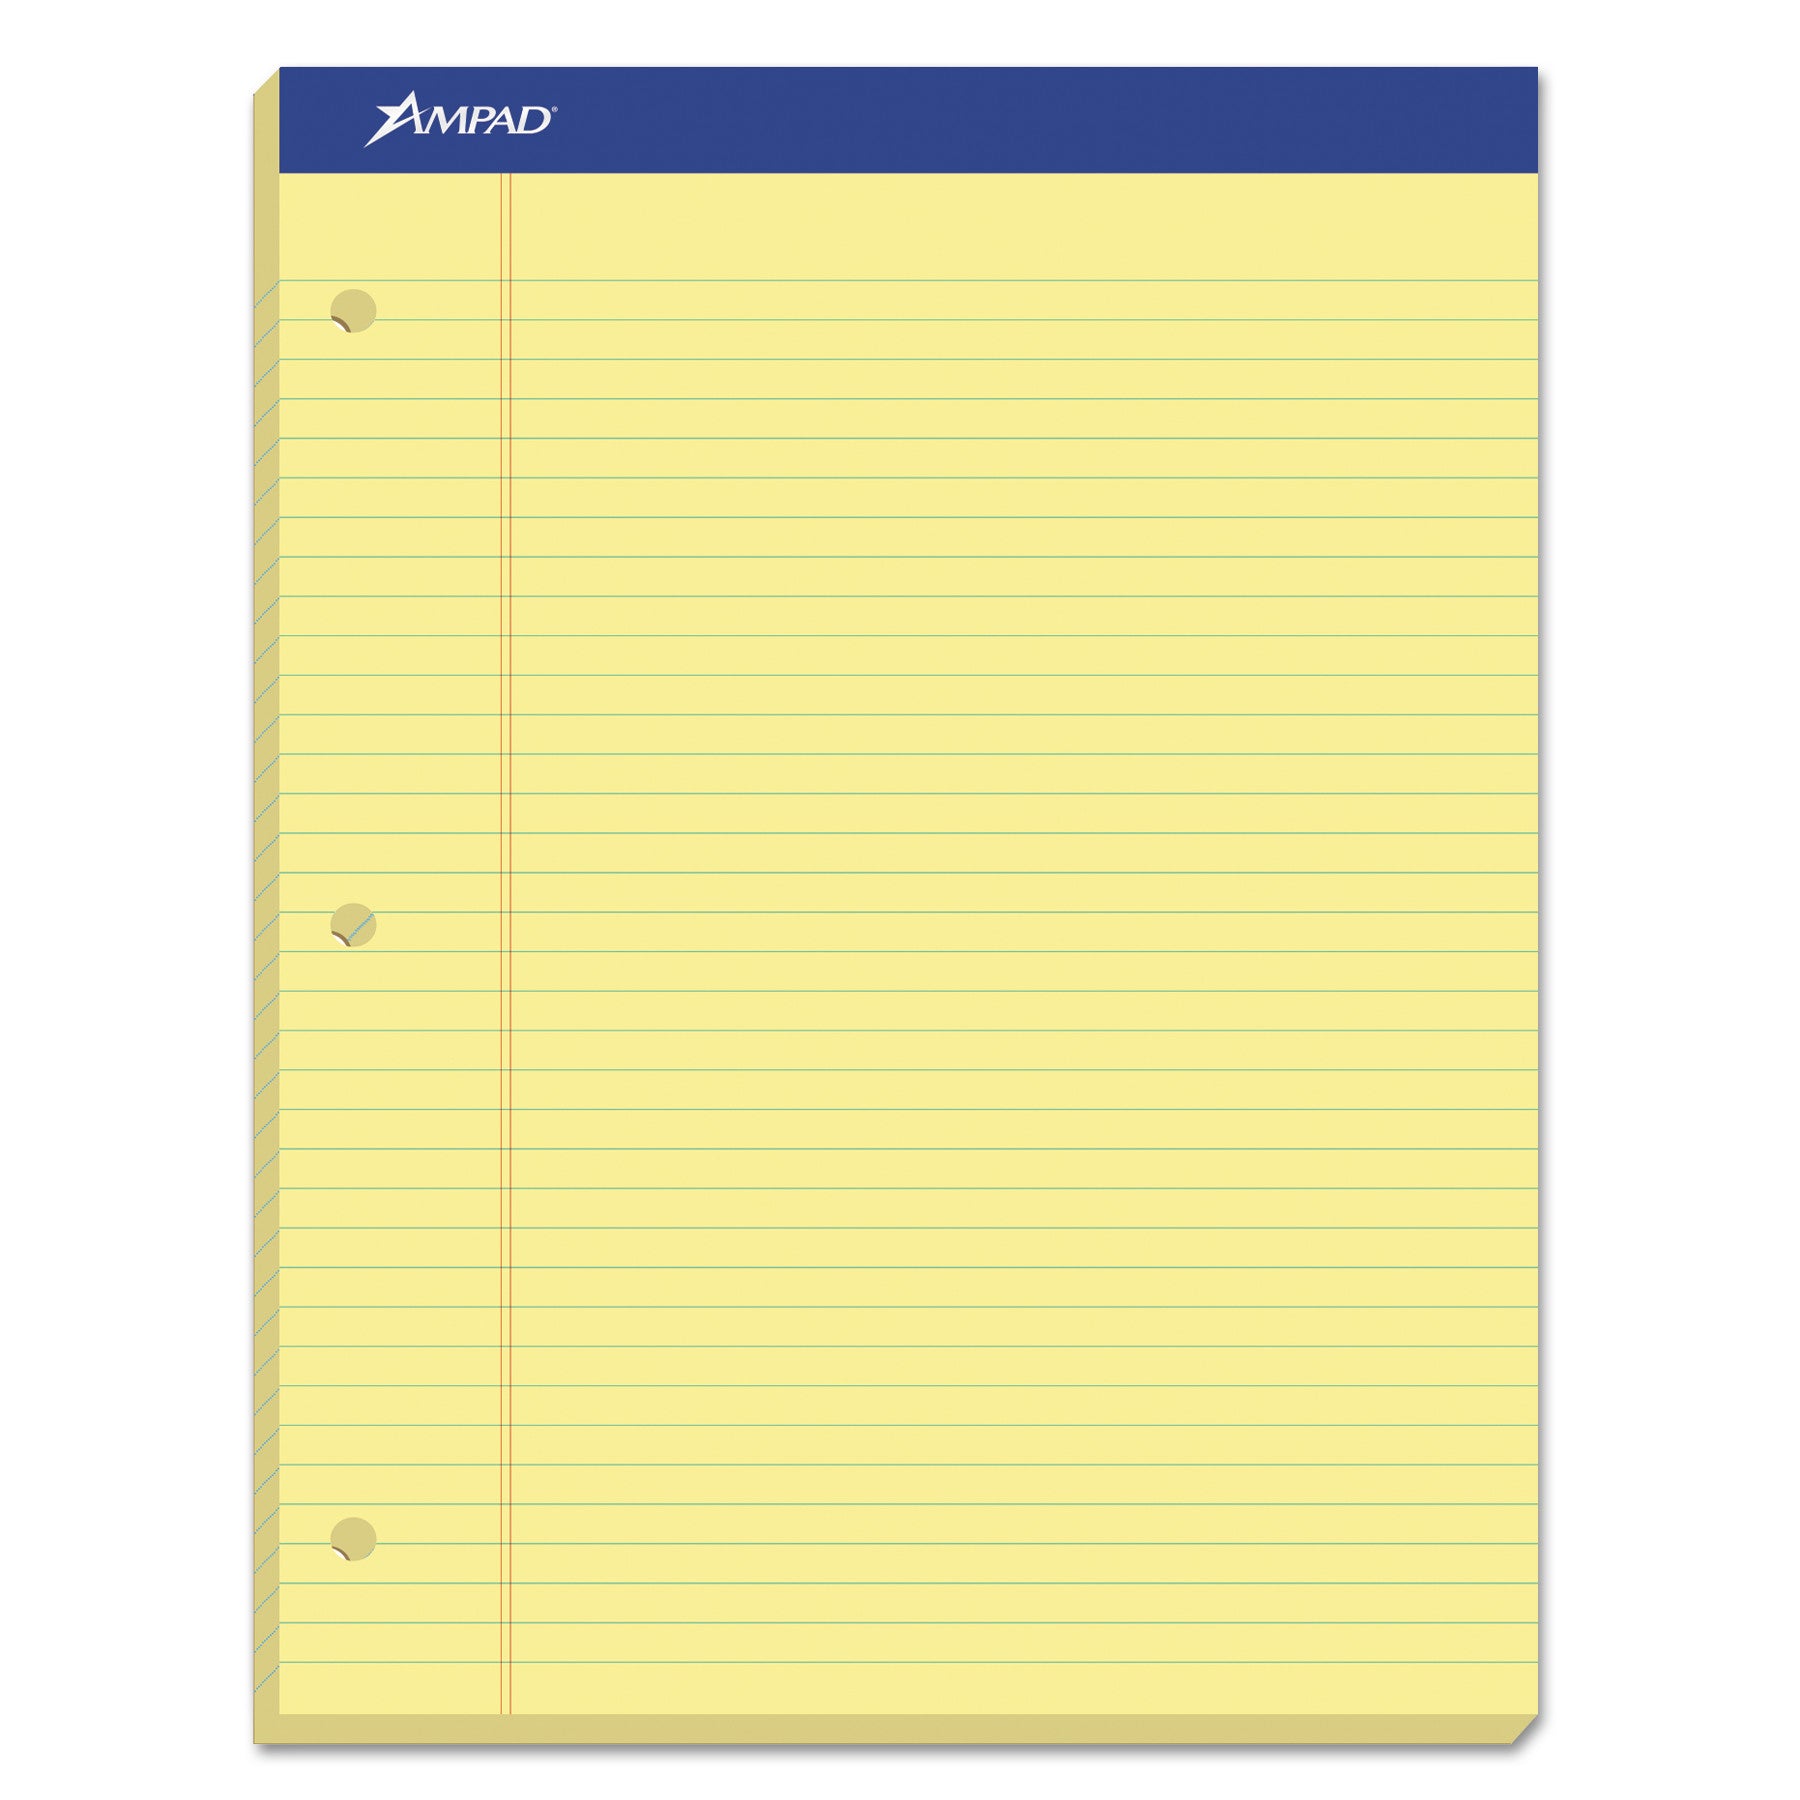 Double Sheet Pads, Narrow Rule, 100 Canary-Yellow 8.5 x 11.75 Sheets - 